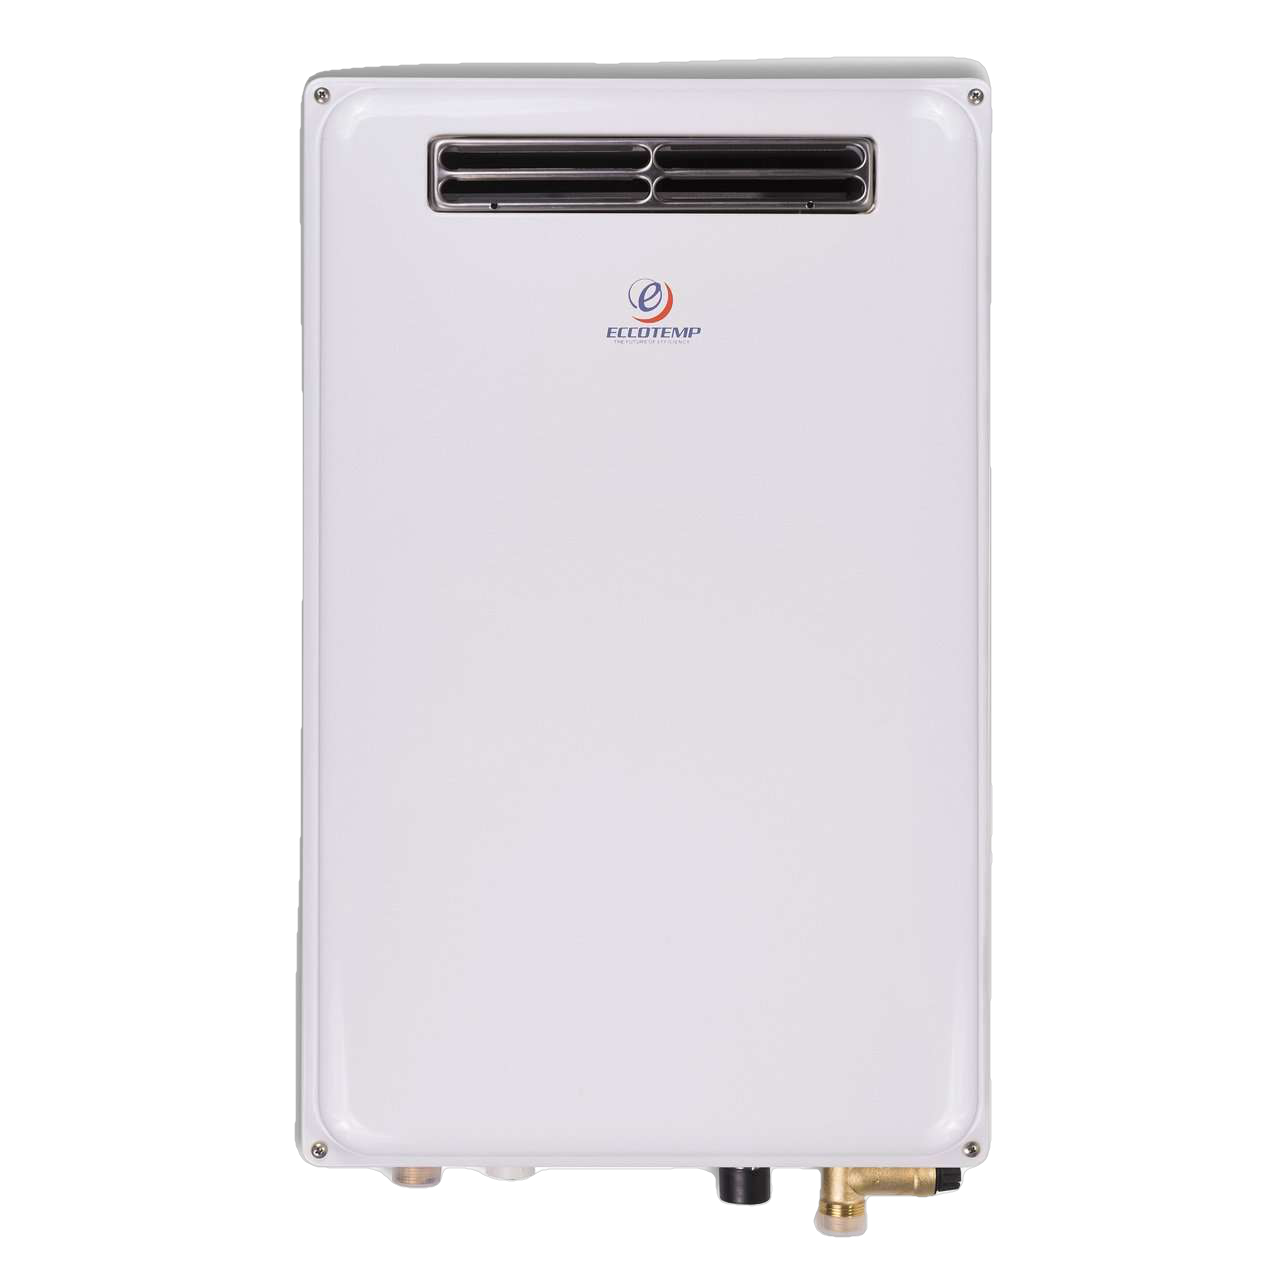 Eccotemp, Eccotemp 45H-NG 6.8 GPM Outdoor Natural Gas Tankless Water Heater Manufacturer RFB